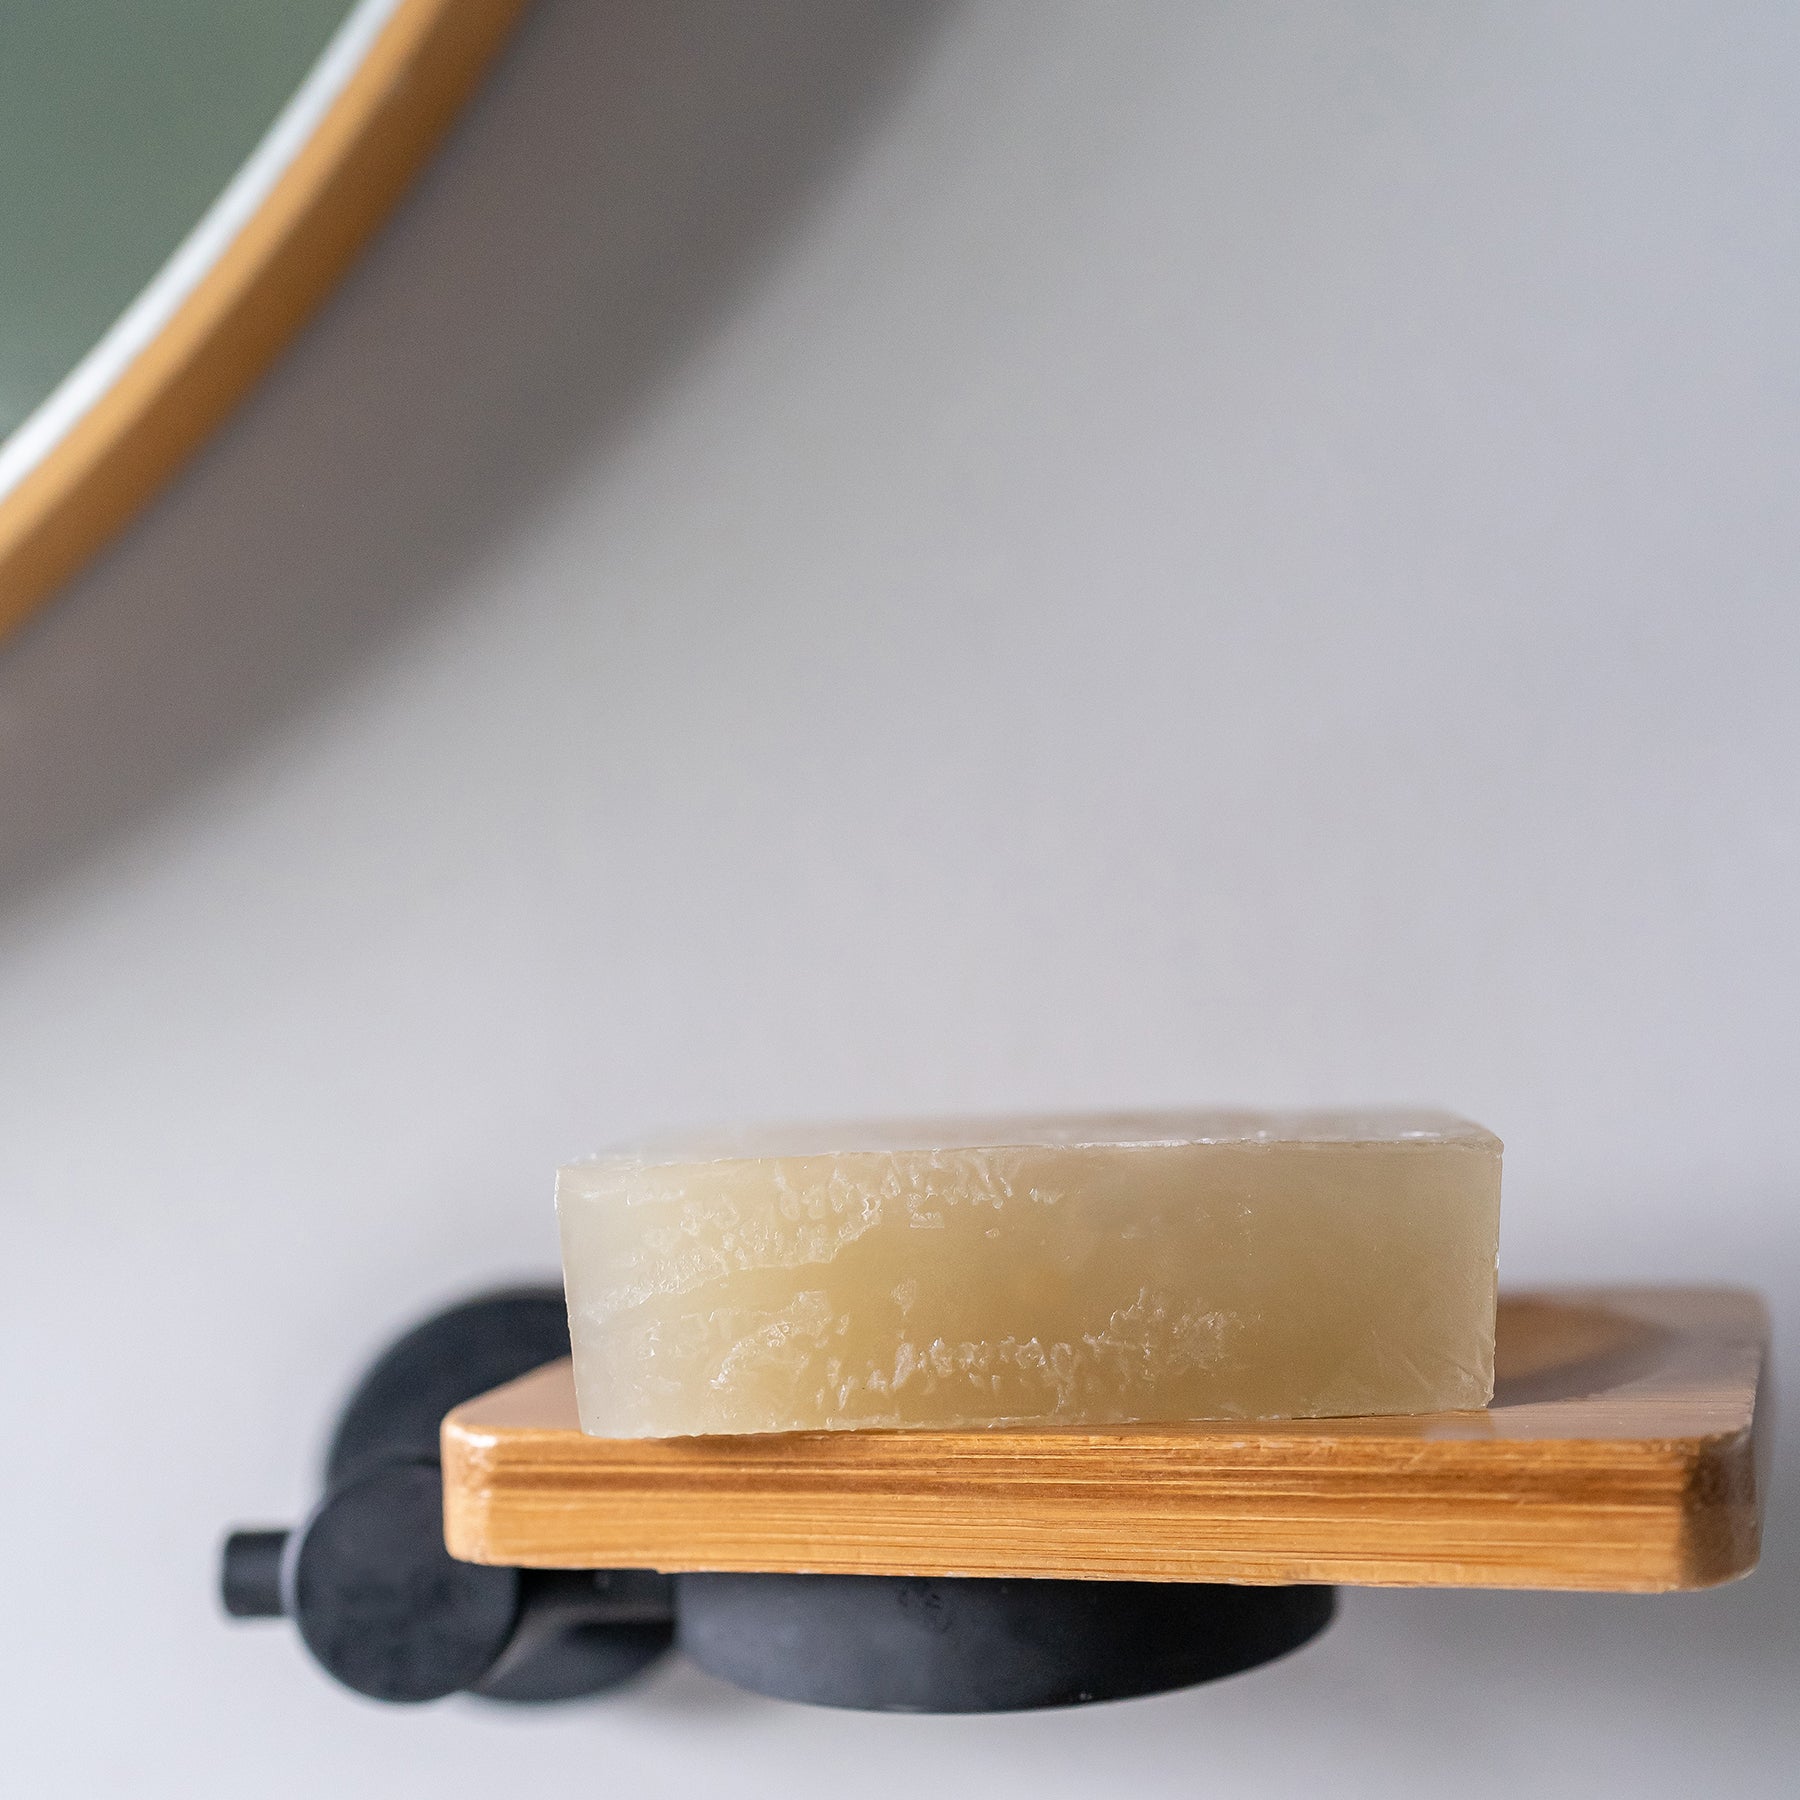 Moringa soap bar on wooden soap dish